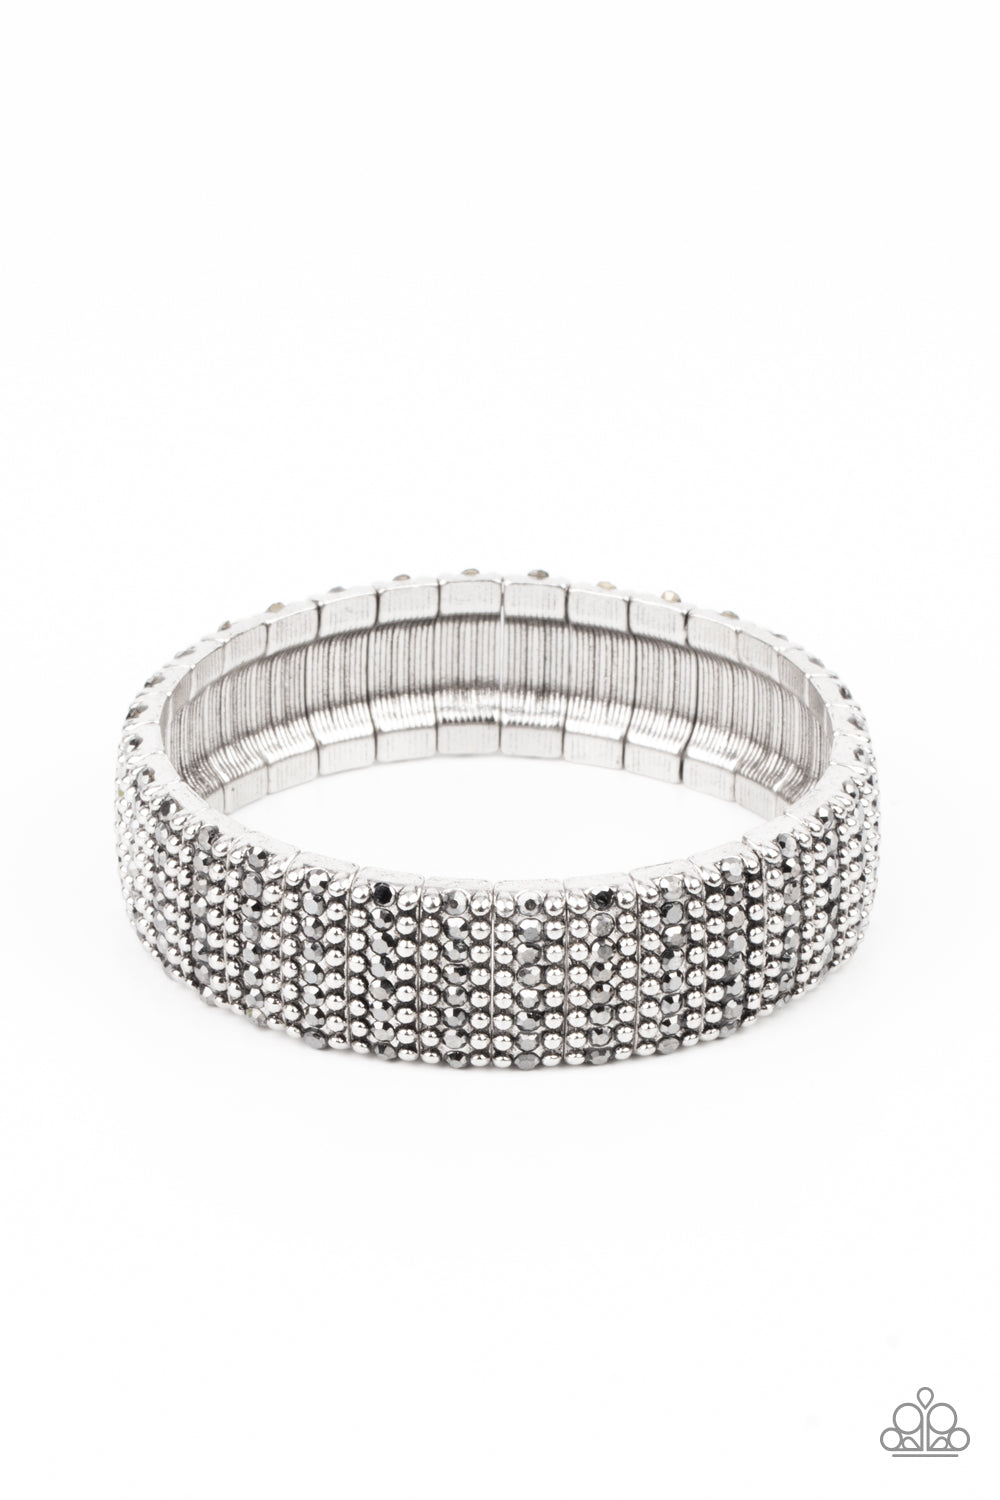 The GRIT Factor - Silver Bracelet - Princess Glam Shop